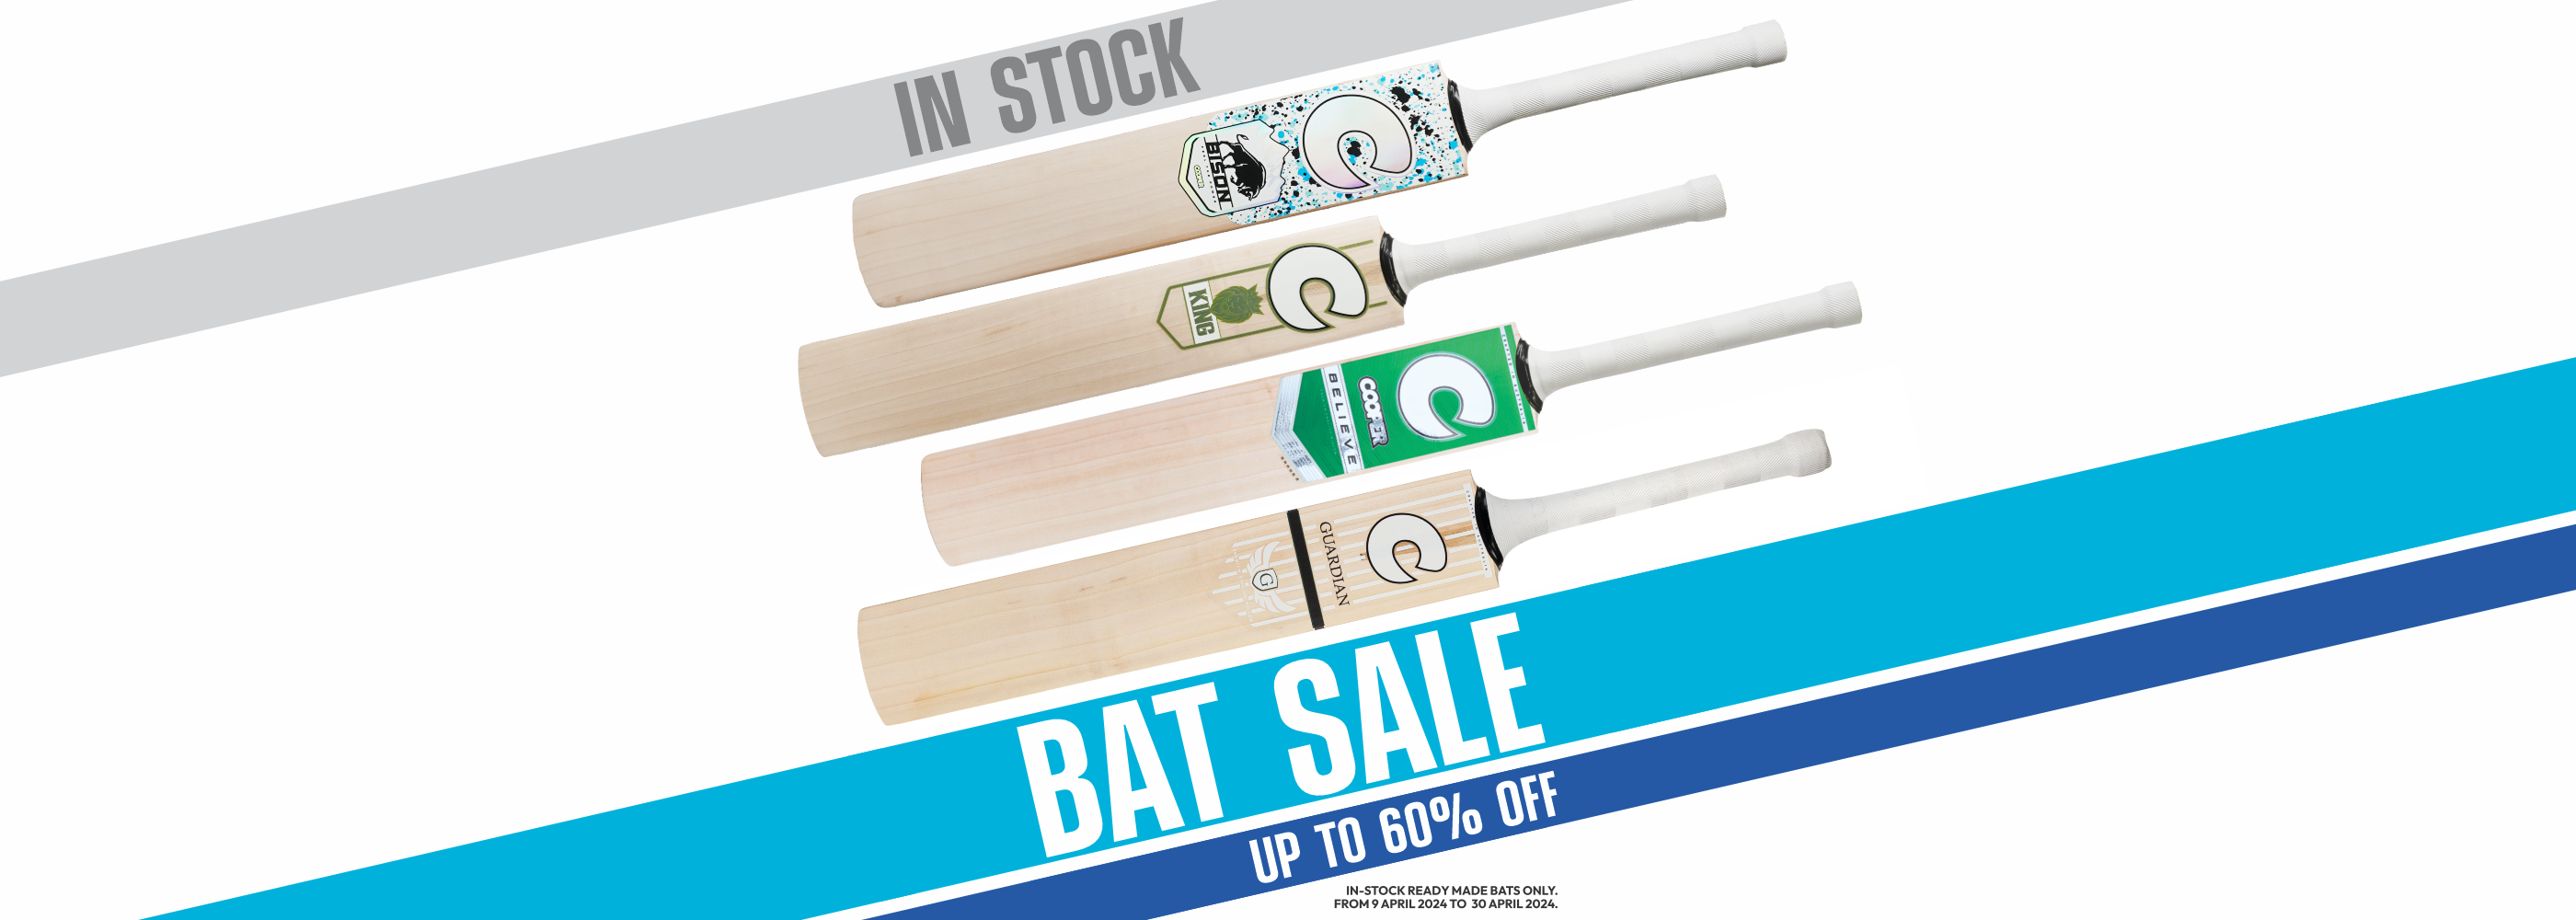 Cooper Cricket in-stock bat sale upto 60% off!